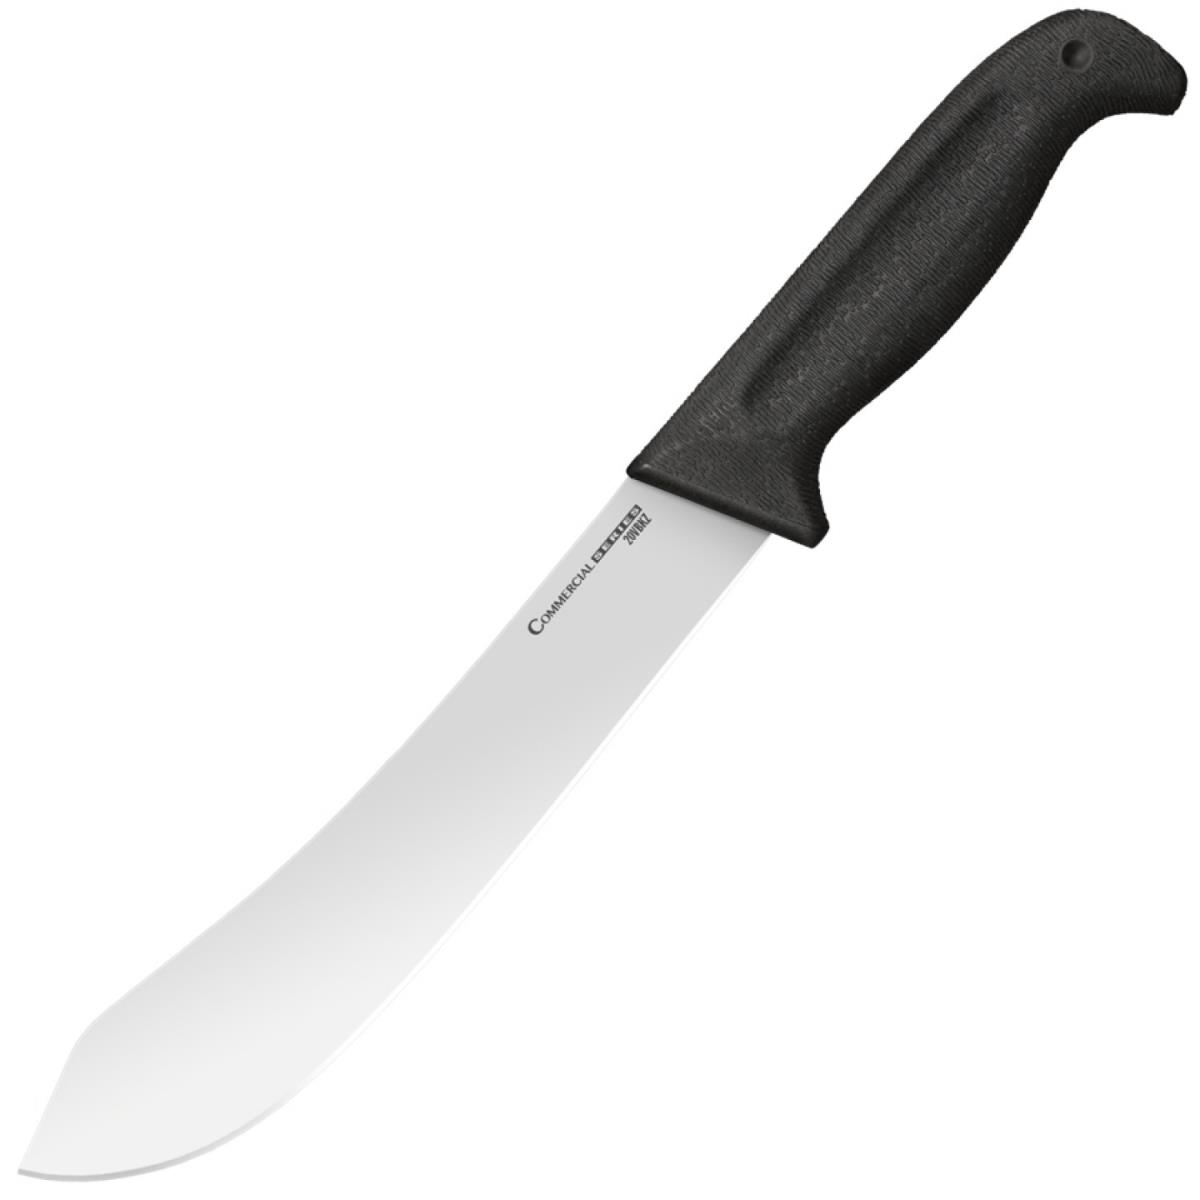 Нож 20VBKZ Butcher Knife мясника фикс., рук-ть Kray-Ex черн, клинок German 4116 20см Cold Steel мачете fox 680 сталь 1 4116 bestar нейлон